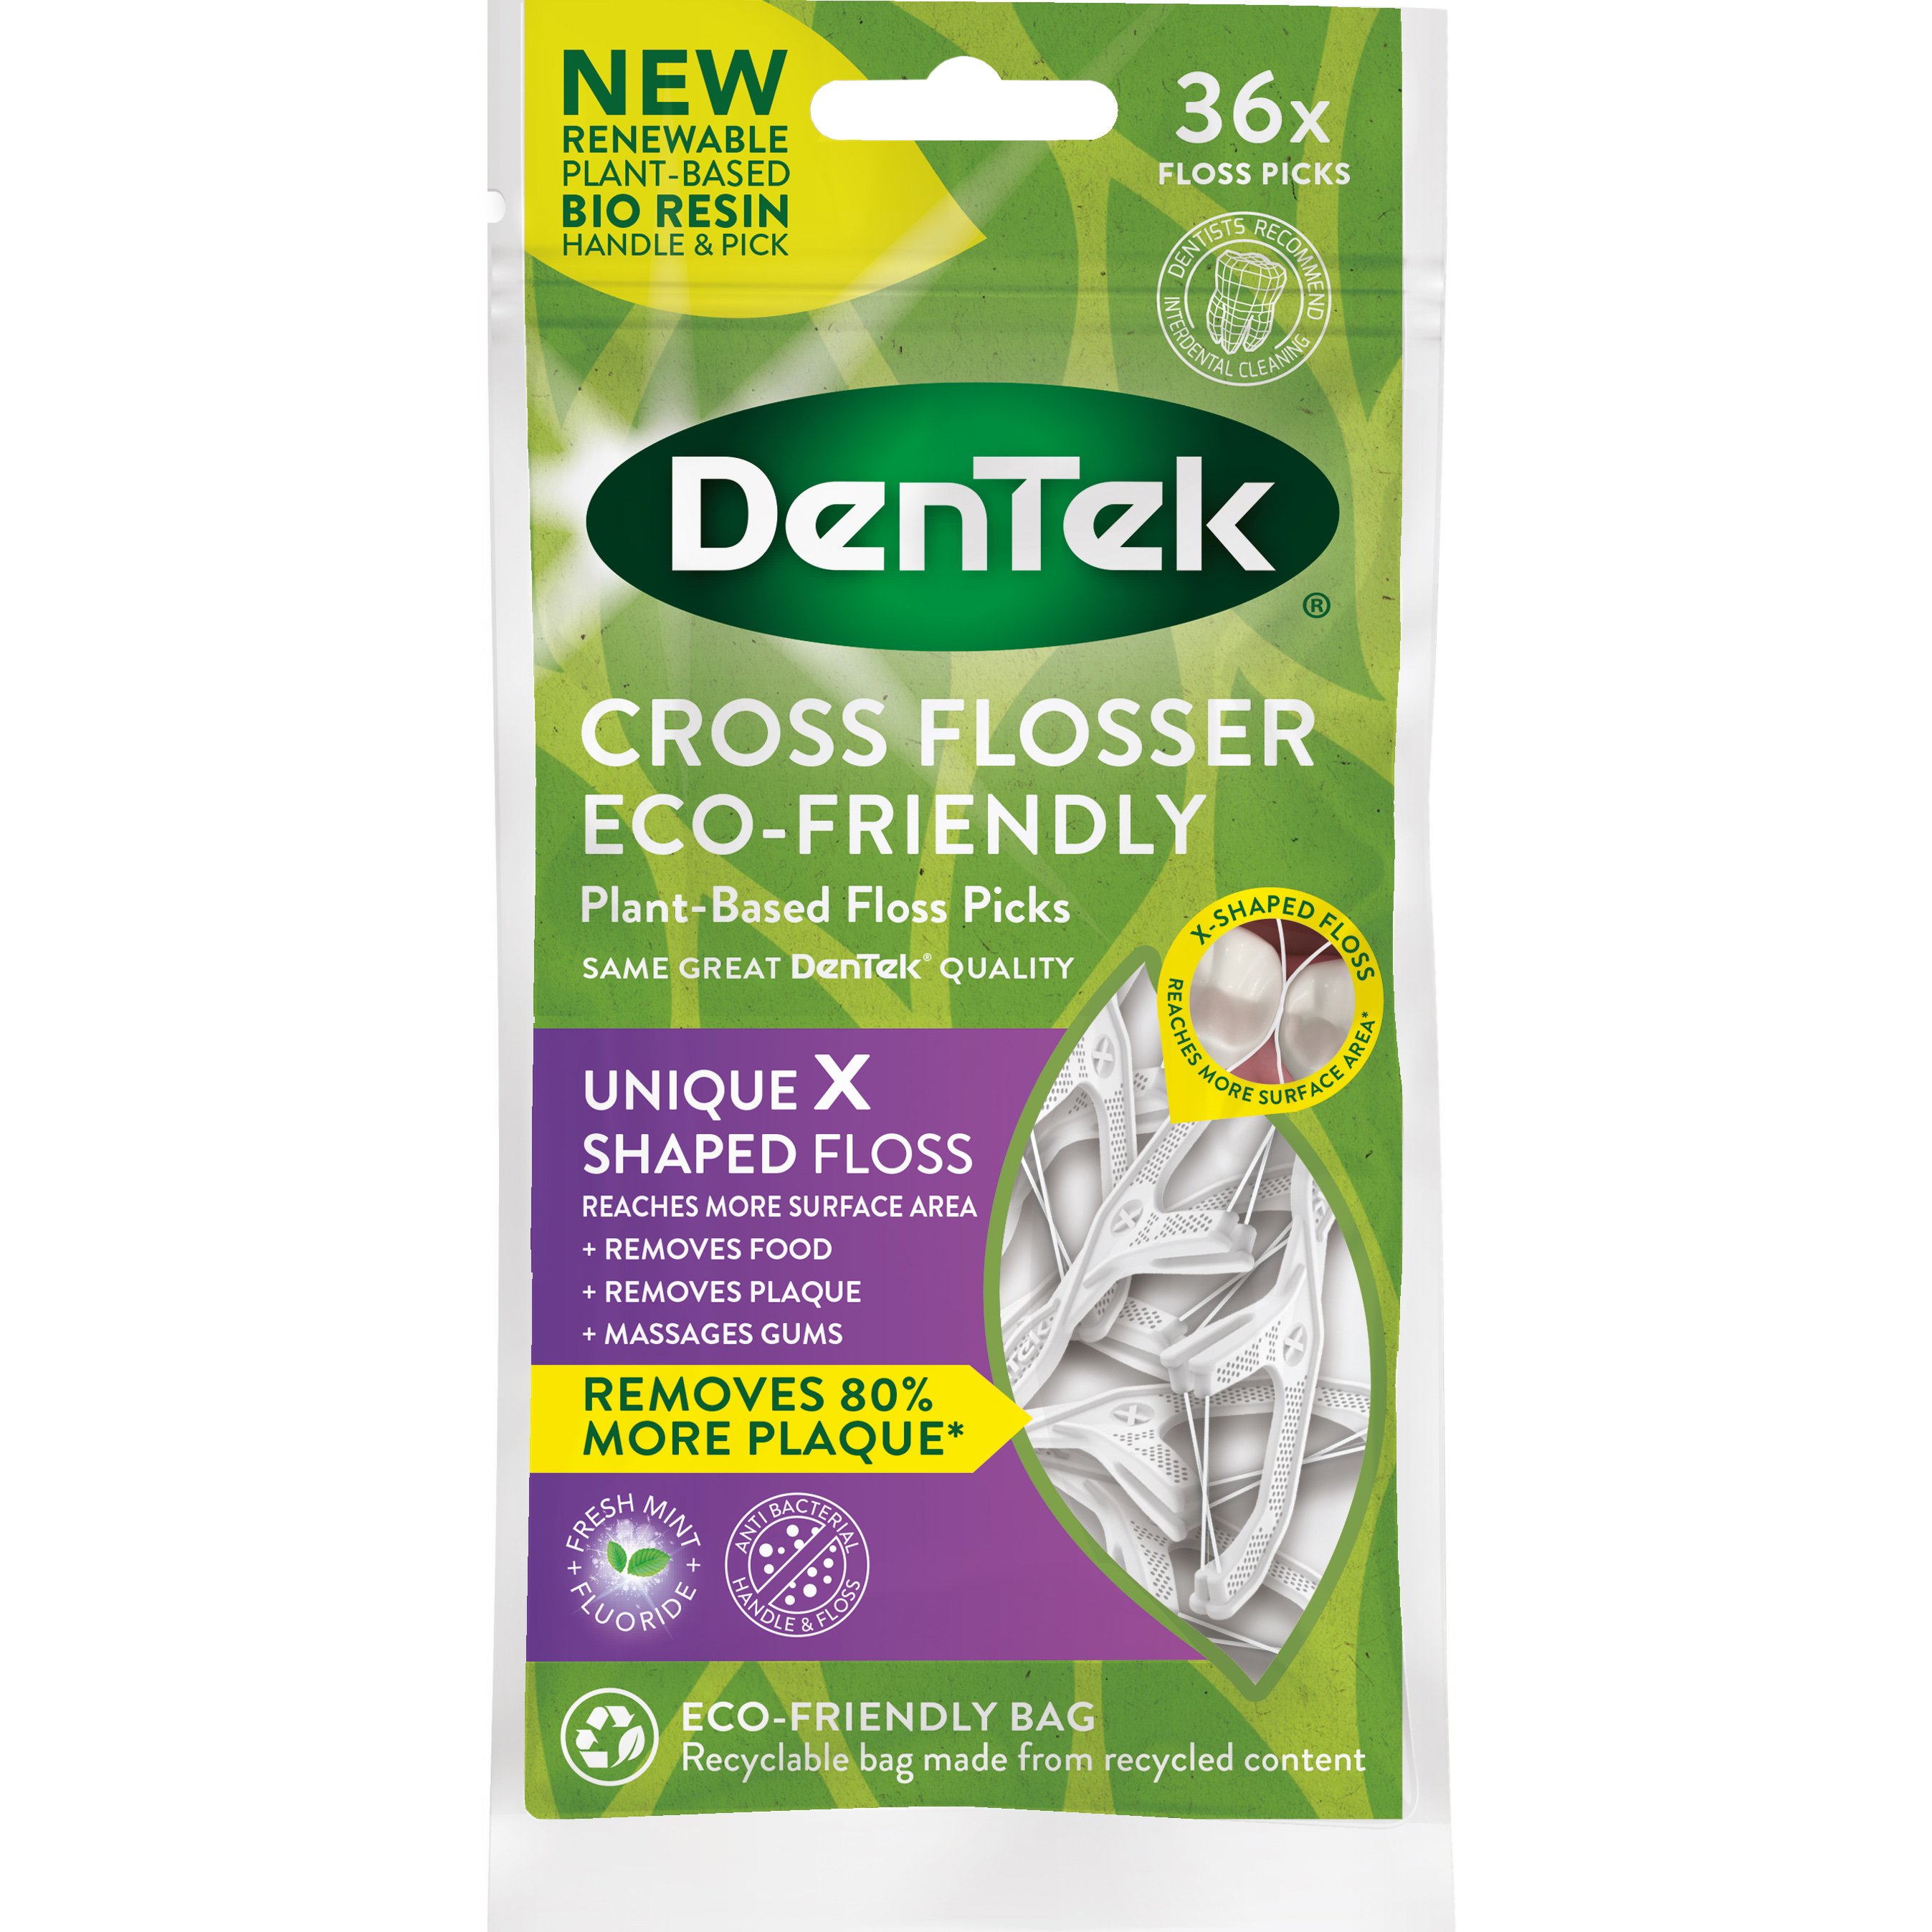 Dentek Cross Flosser Plant-Based Unique X Shaped Floss Picks Οδοντογλυφίδα με Οδοντικό Νήμα σε Σχήμα Χ για την Απομάκρυνση Περισσότερης Οδοντικής Πλάκας 36 Τεμάχια